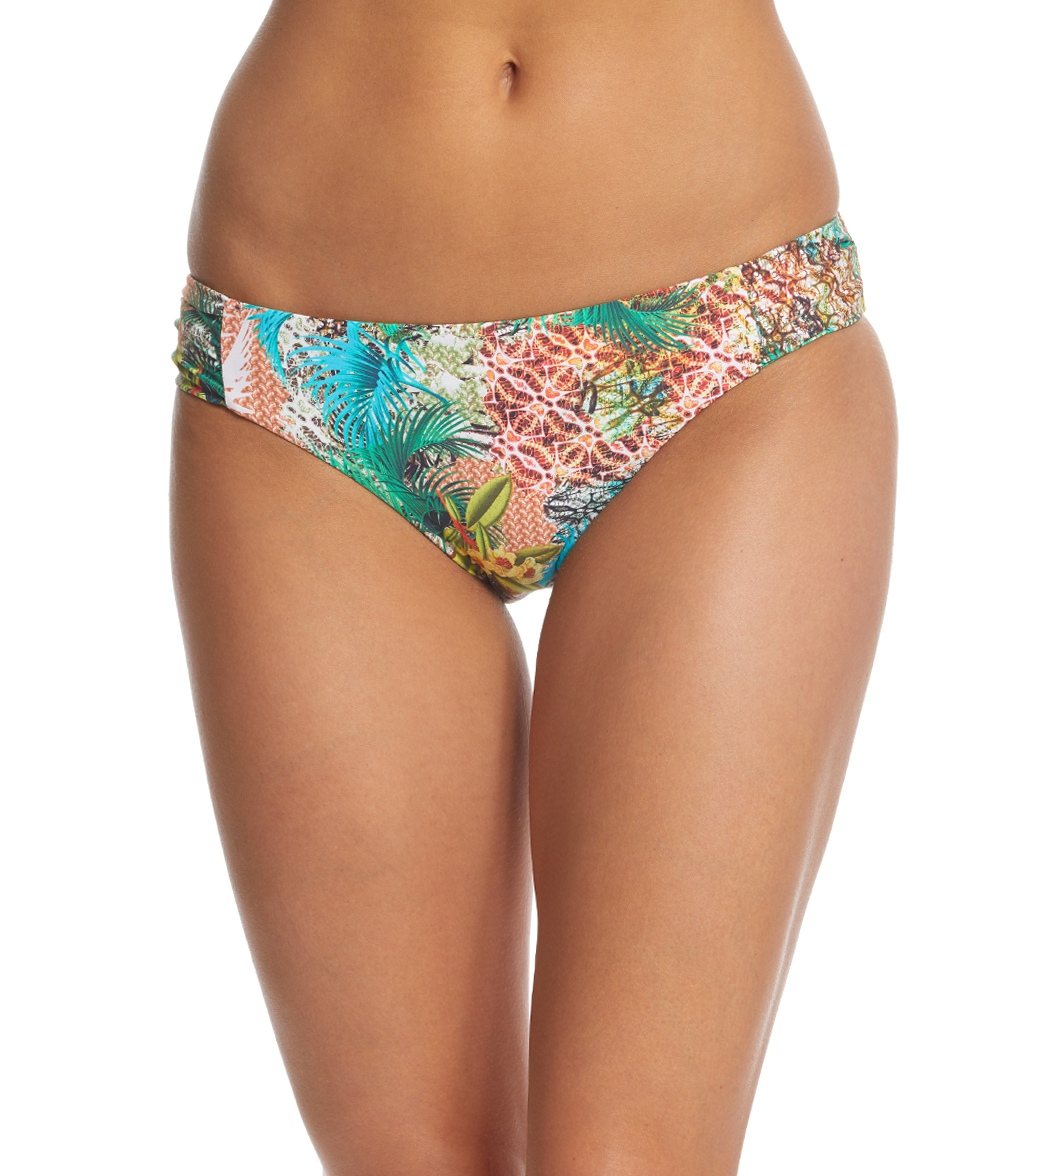 Sunsets Tahitian Dream Femme Fatale Bikini Bottom - Large - Swimoutlet.com